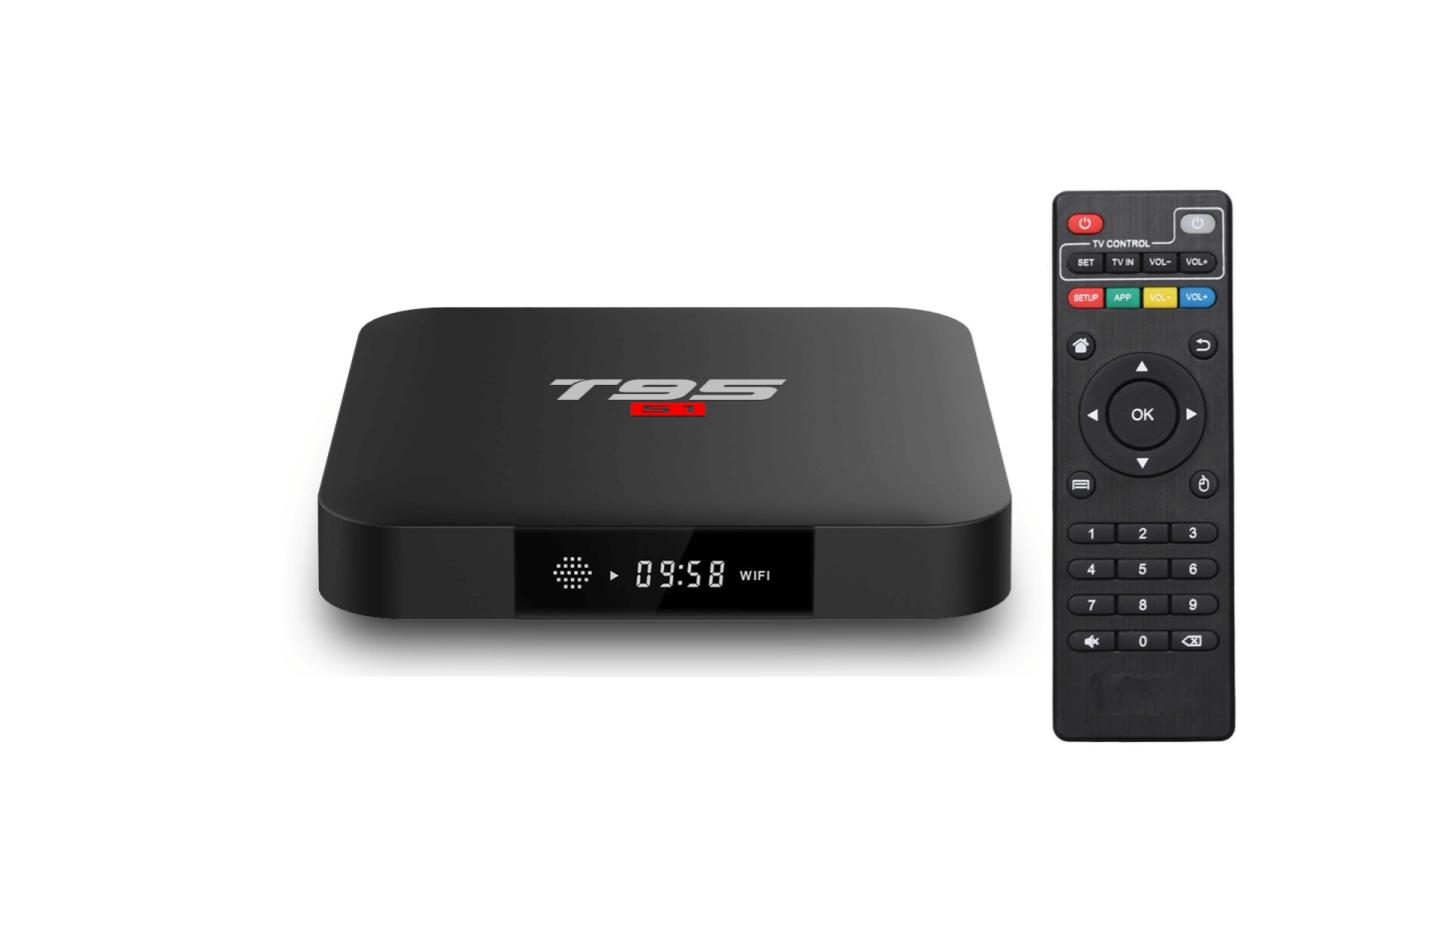 Тв приставки рейтинг лучших. T95x TV Box. Самые лучшие приставки андроид ТВ. ТВ бокс as. Обои для TV Box Android.